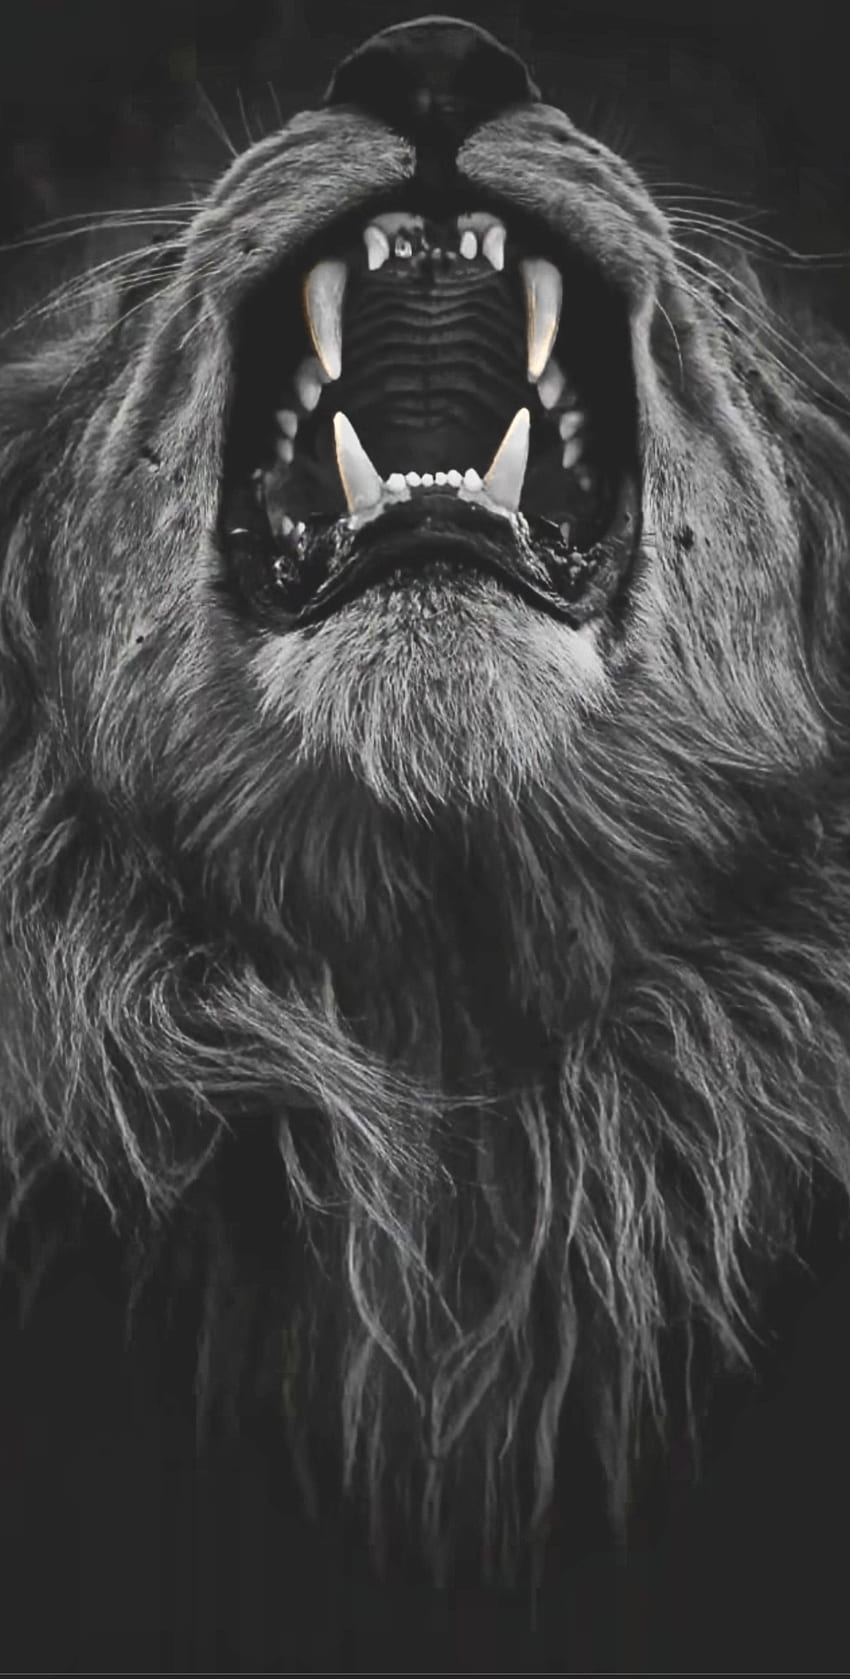 Singa mengaum, kepala, raja, agresif, monster wallpaper ponsel HD